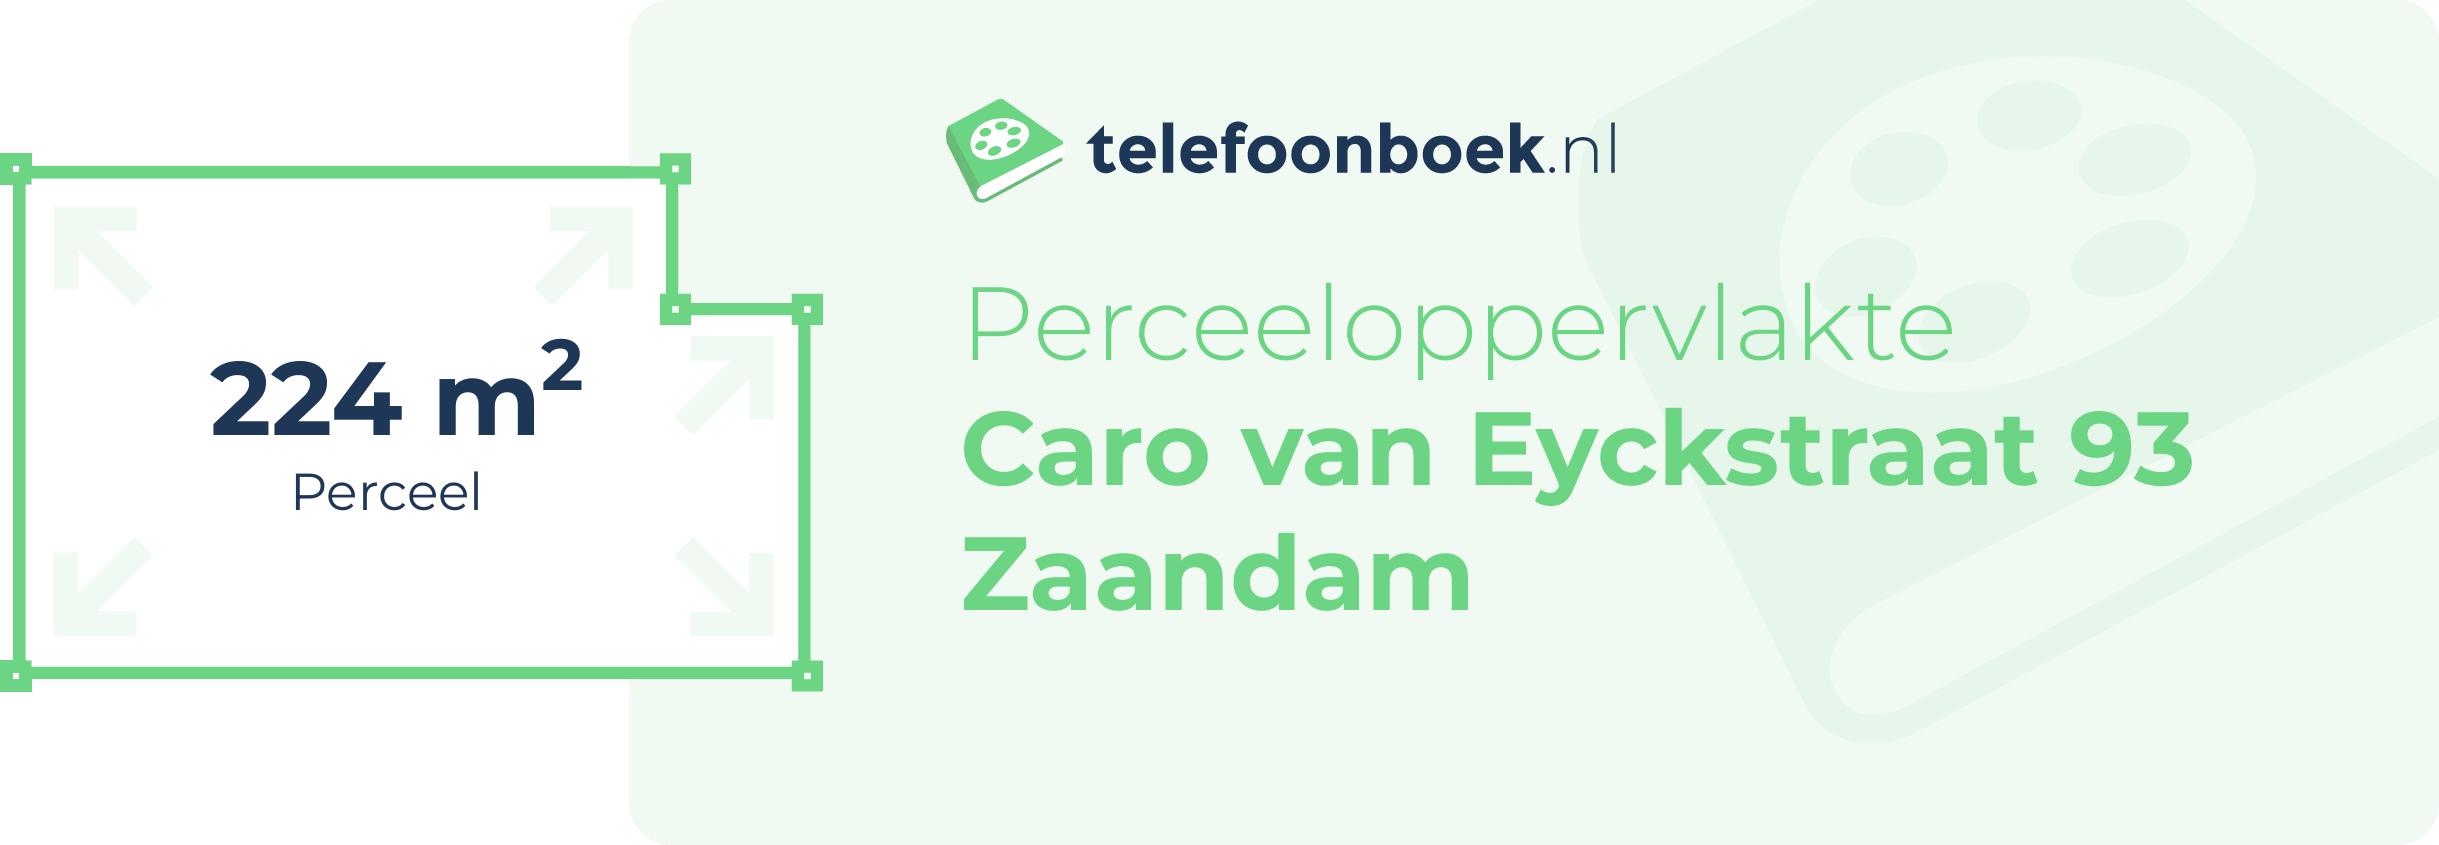 Perceeloppervlakte Caro Van Eyckstraat 93 Zaandam